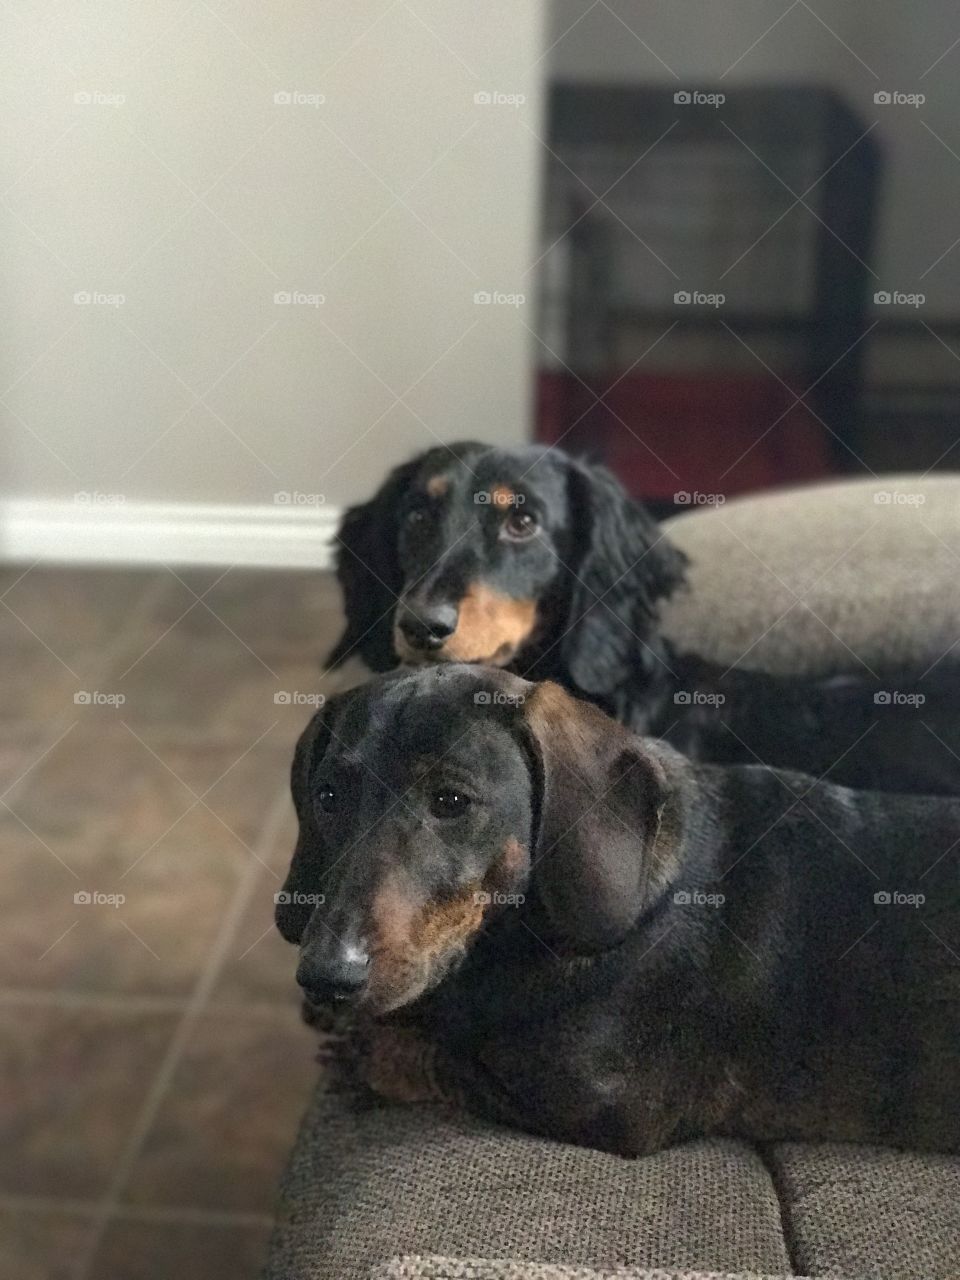 Our sweet boys 💕 #dachshund